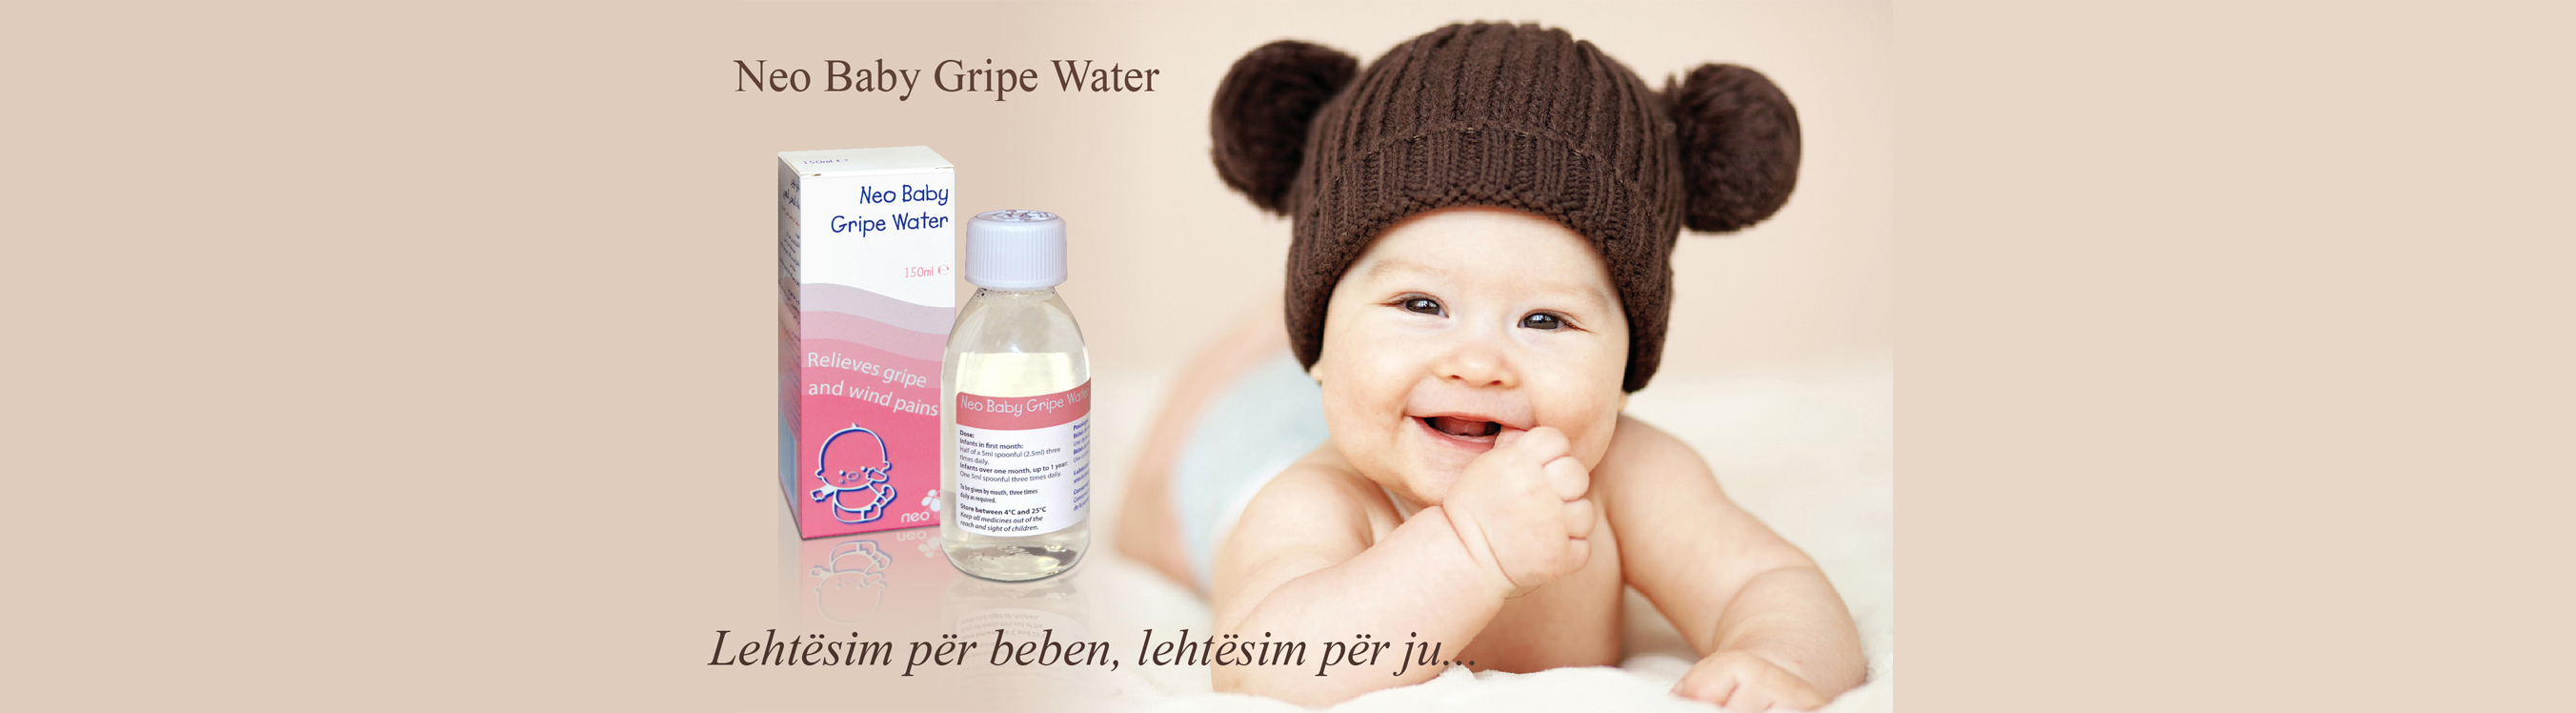 Neo Baby Gripe Water